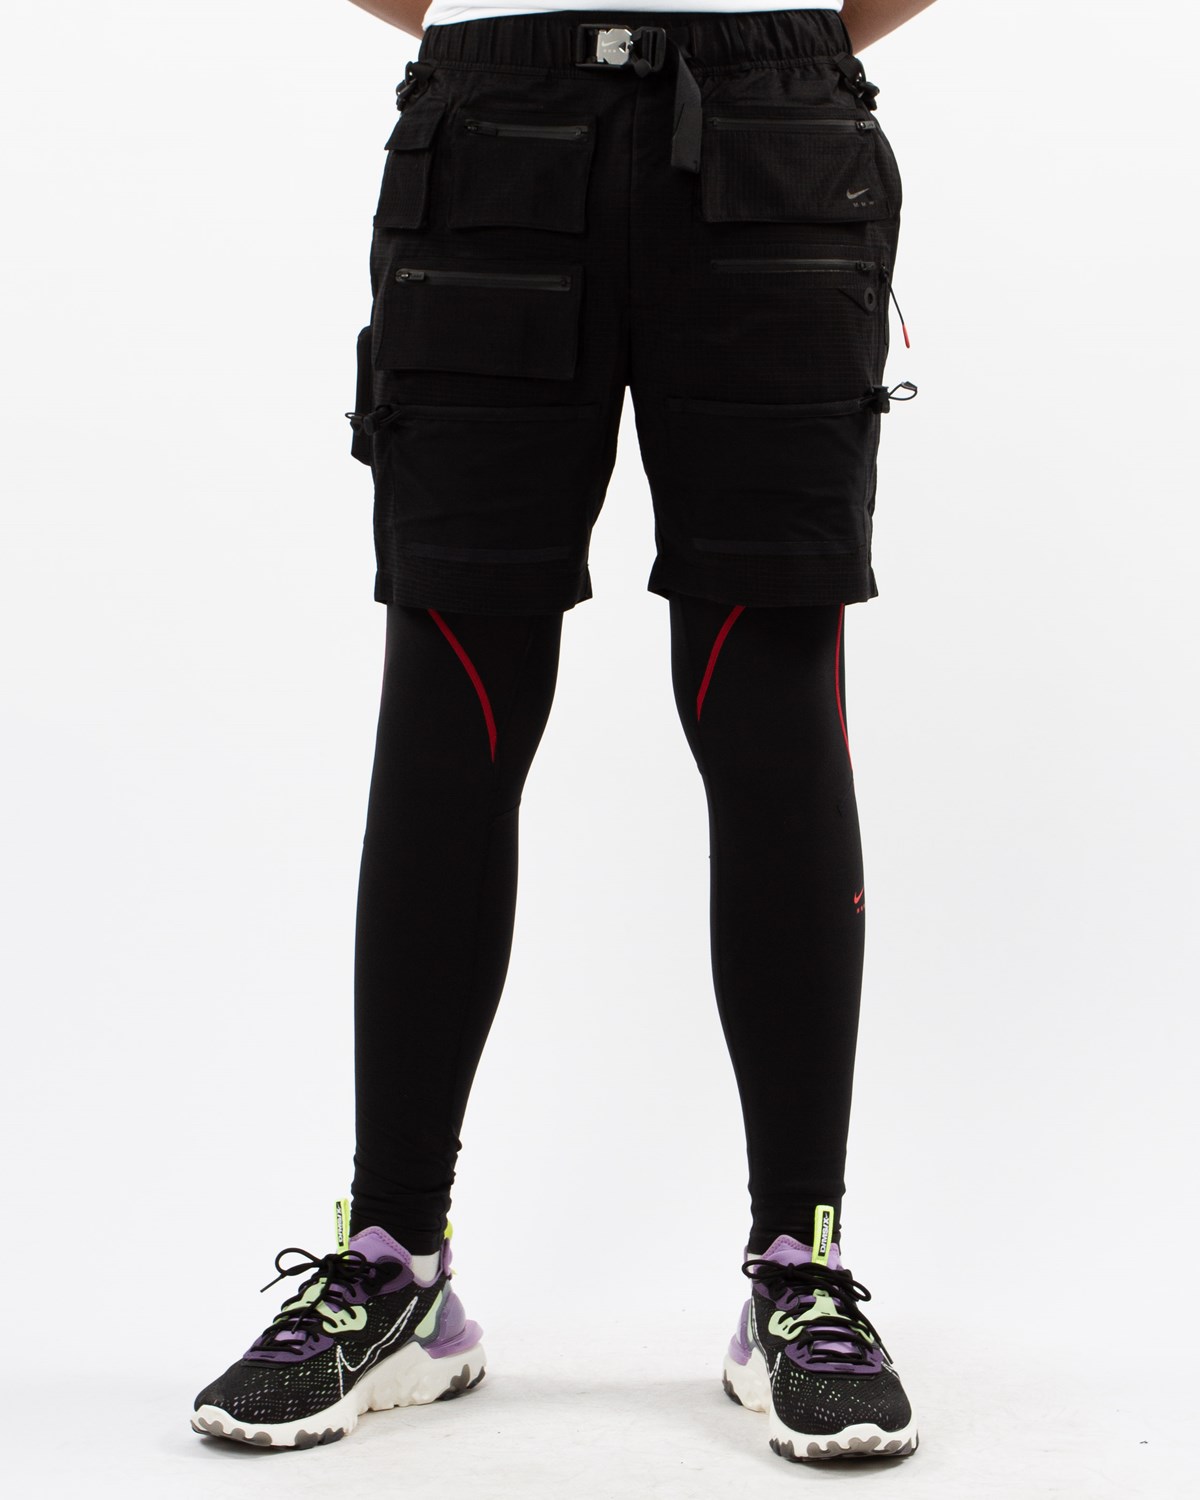 M NRG x SE Hybrid Tight - MMW Nike Bottoms Shorts Black